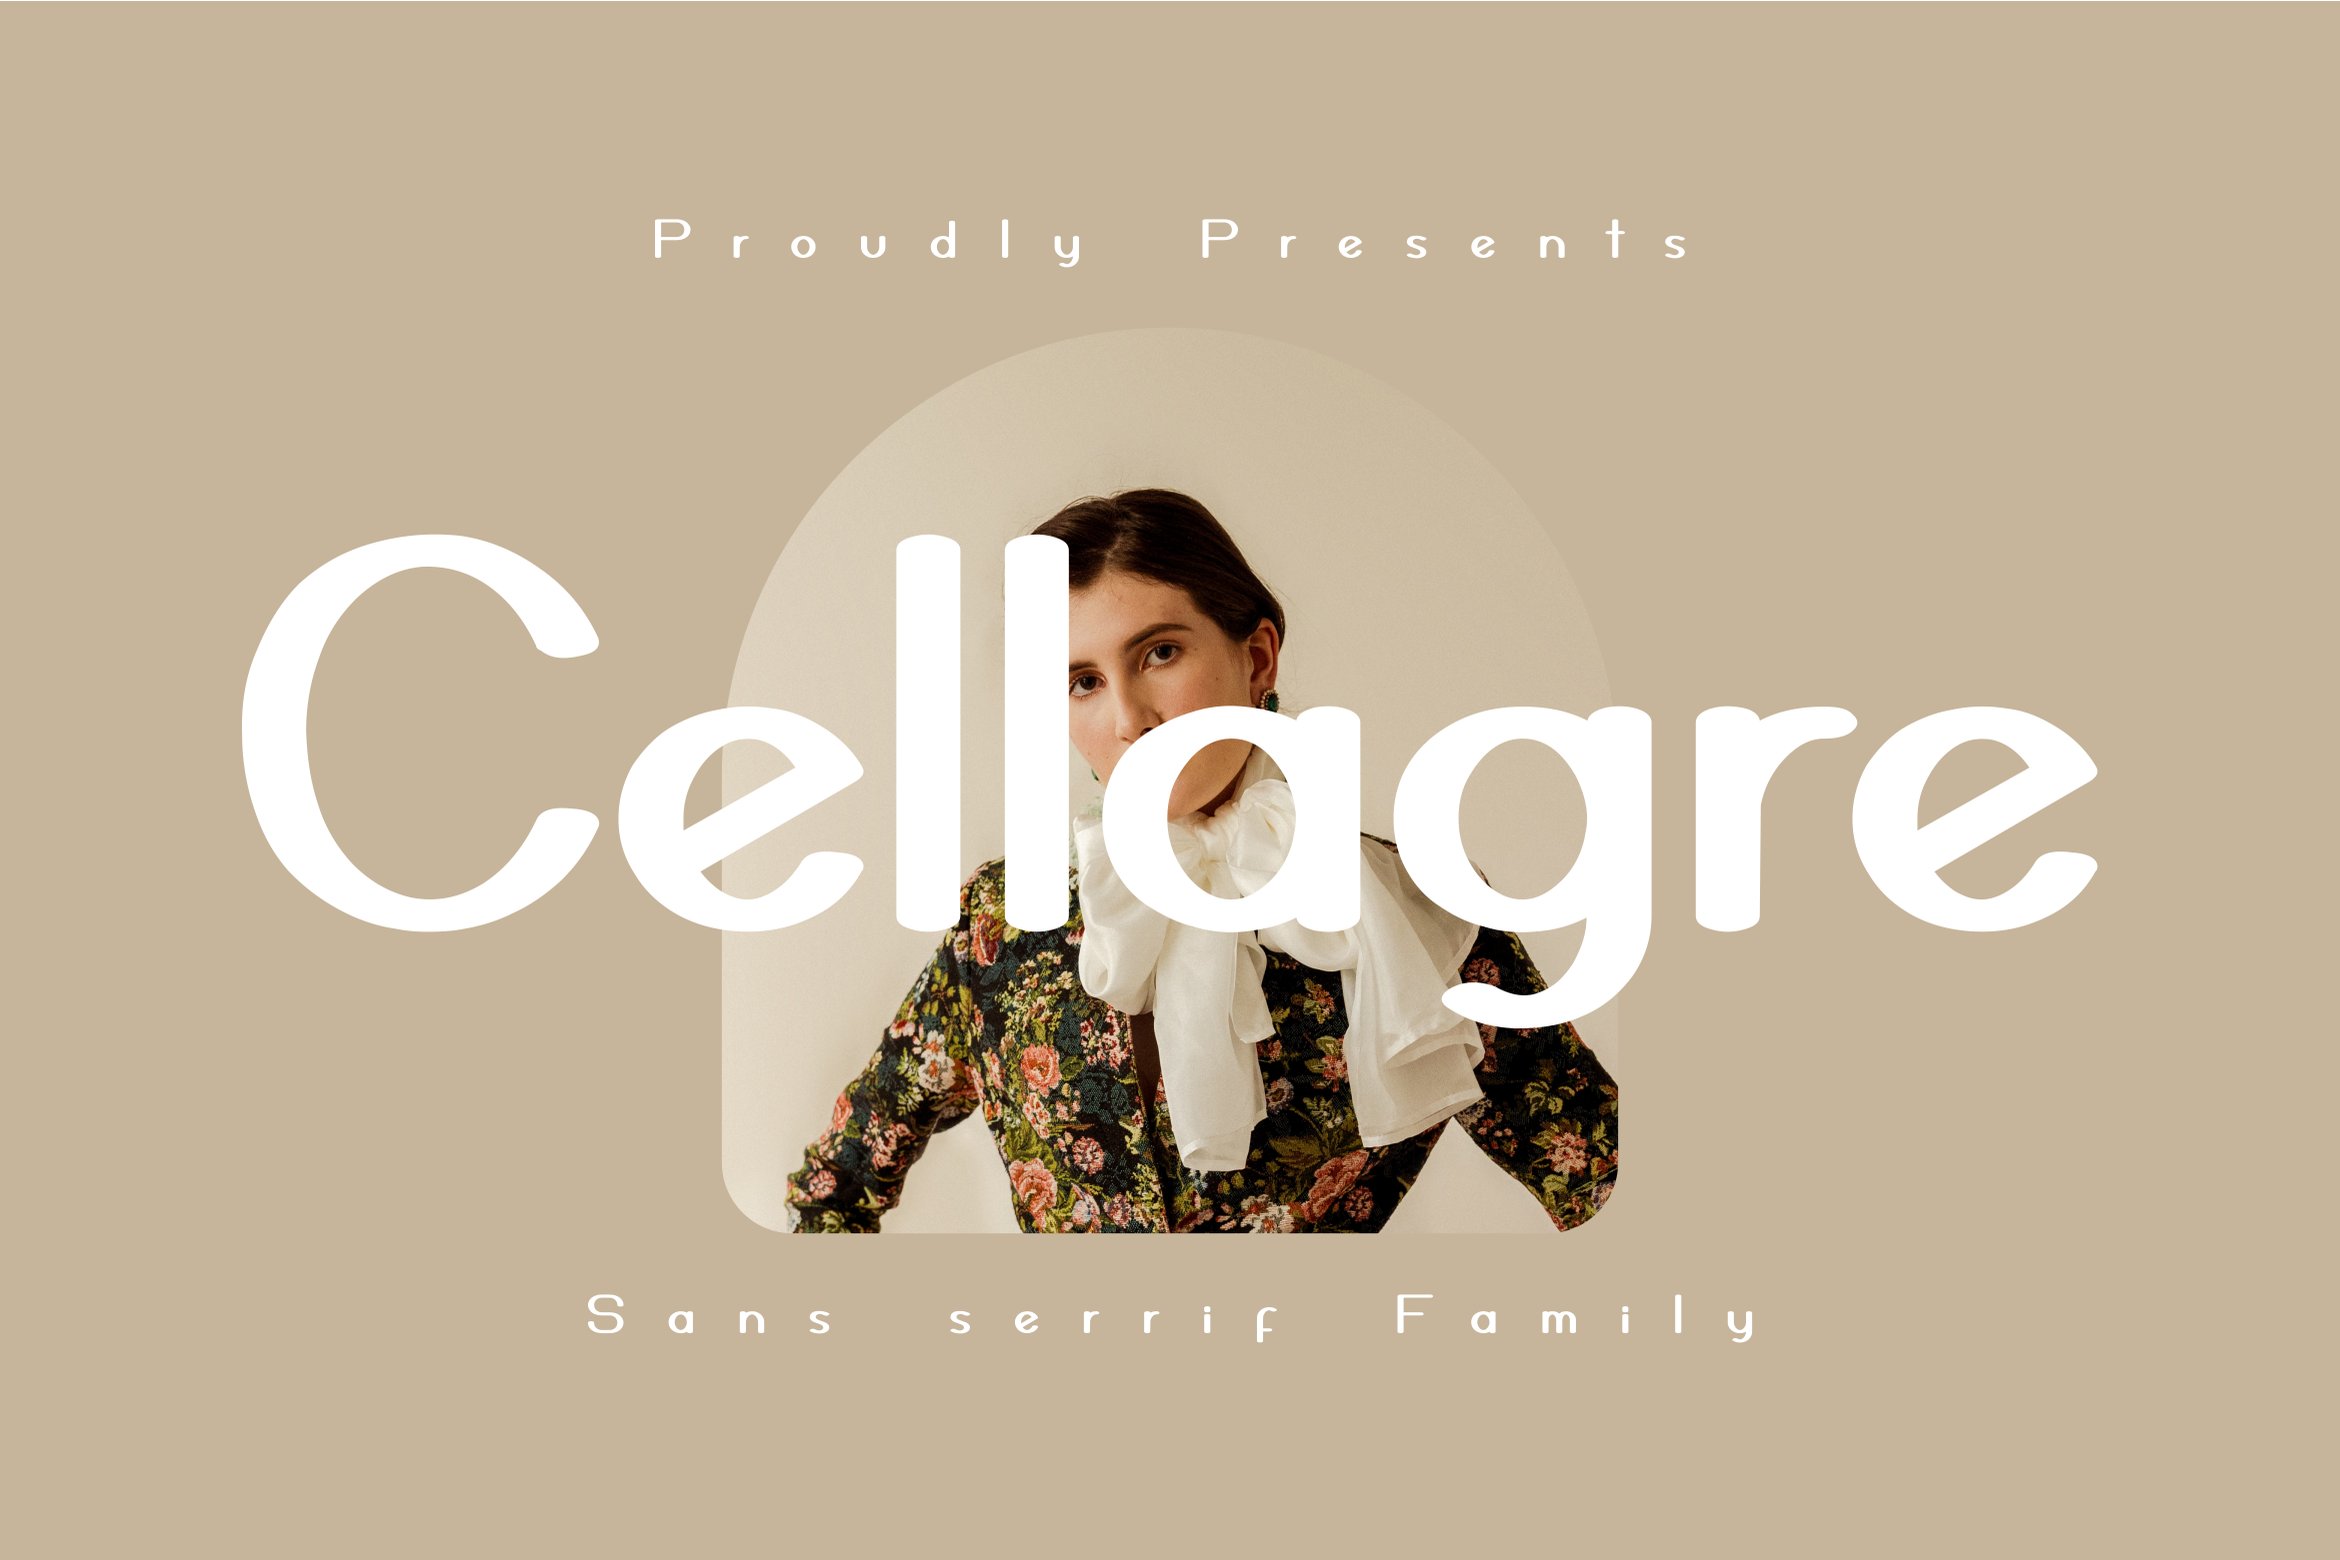 Cellagre Font cover image.